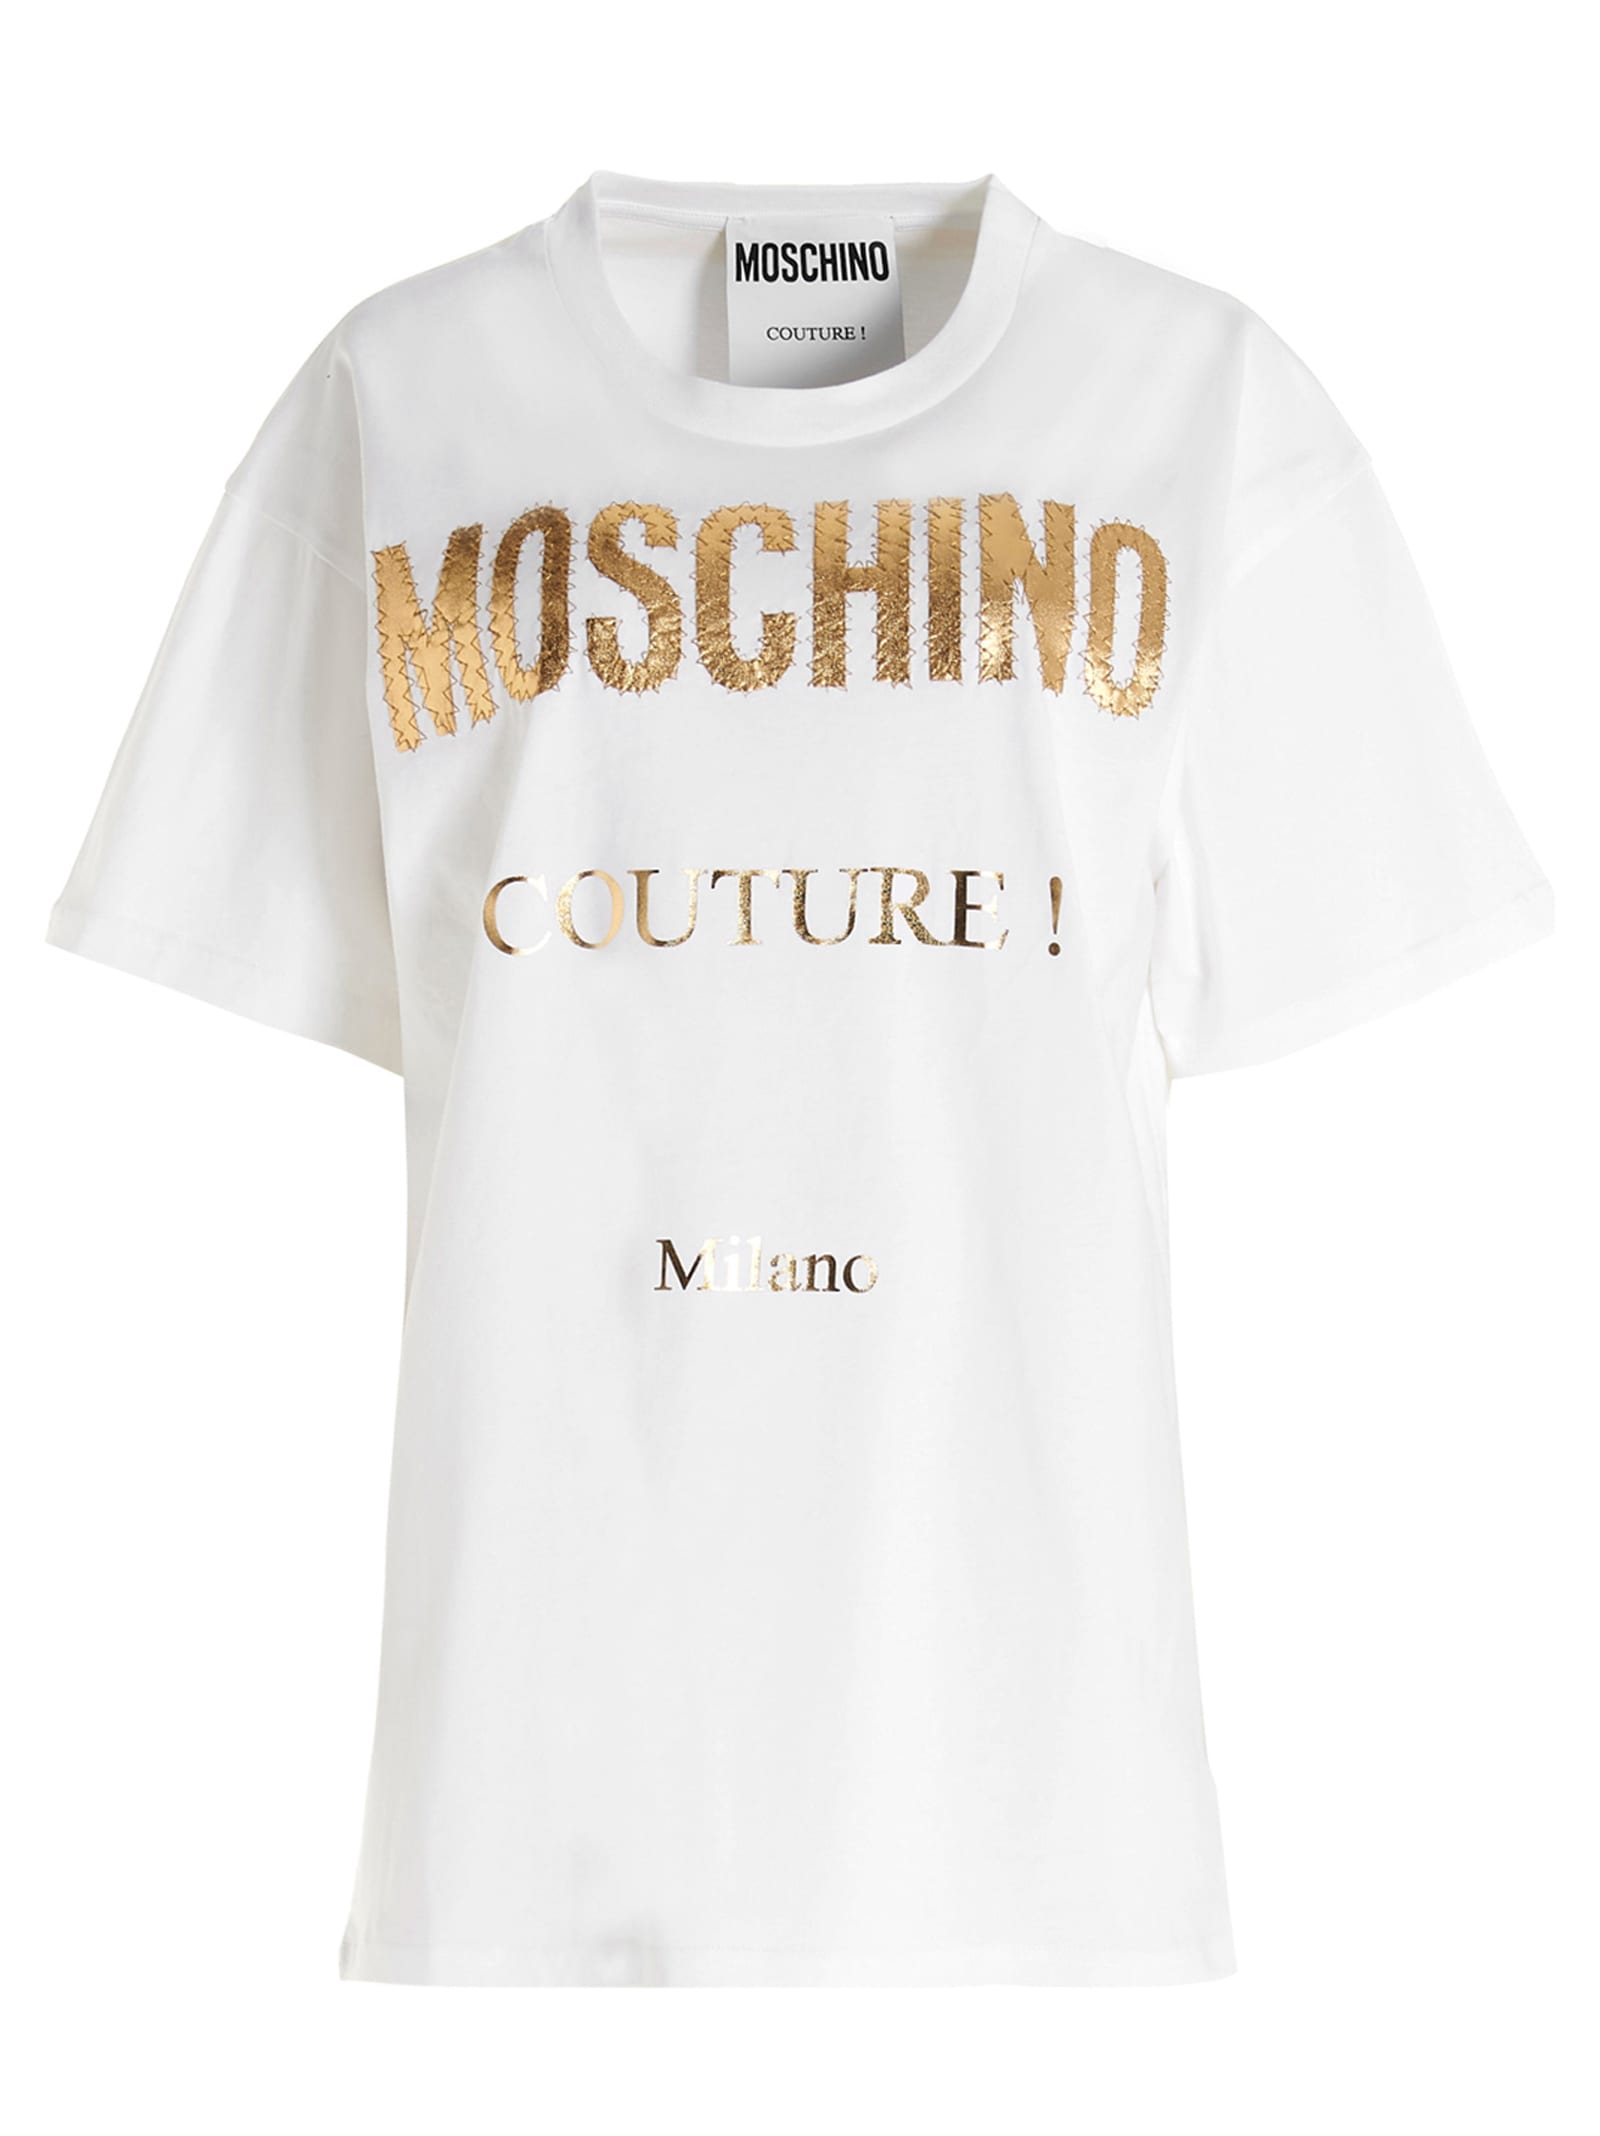 Moschino Couture Logo T-shirt